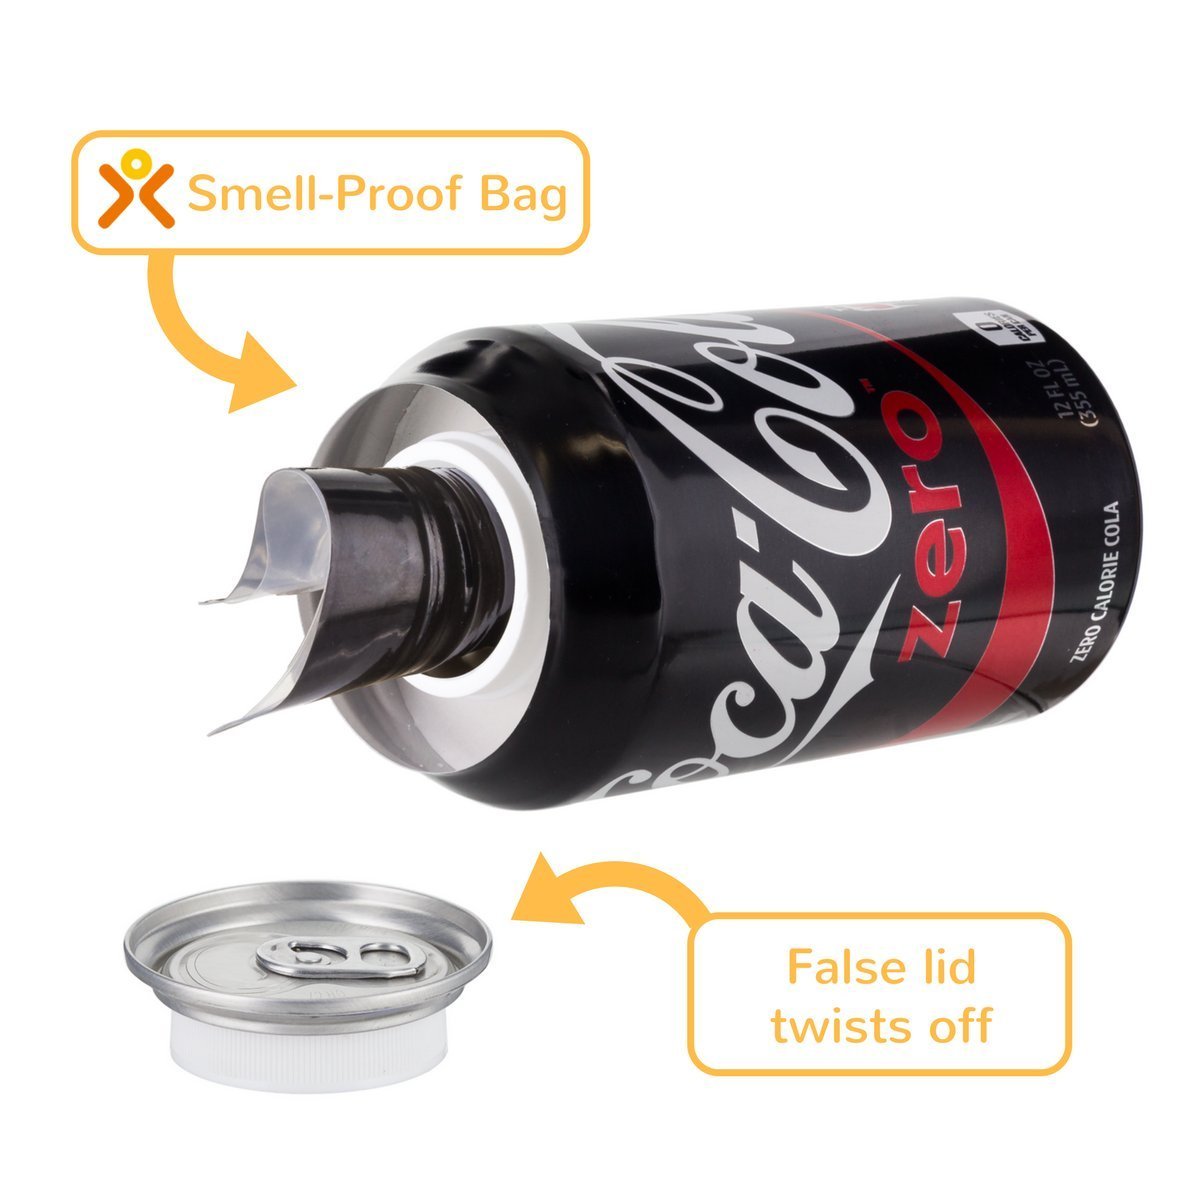 Coke Zero Soda Concealment Can Diversion Safe Stash Can - Concealment Cans